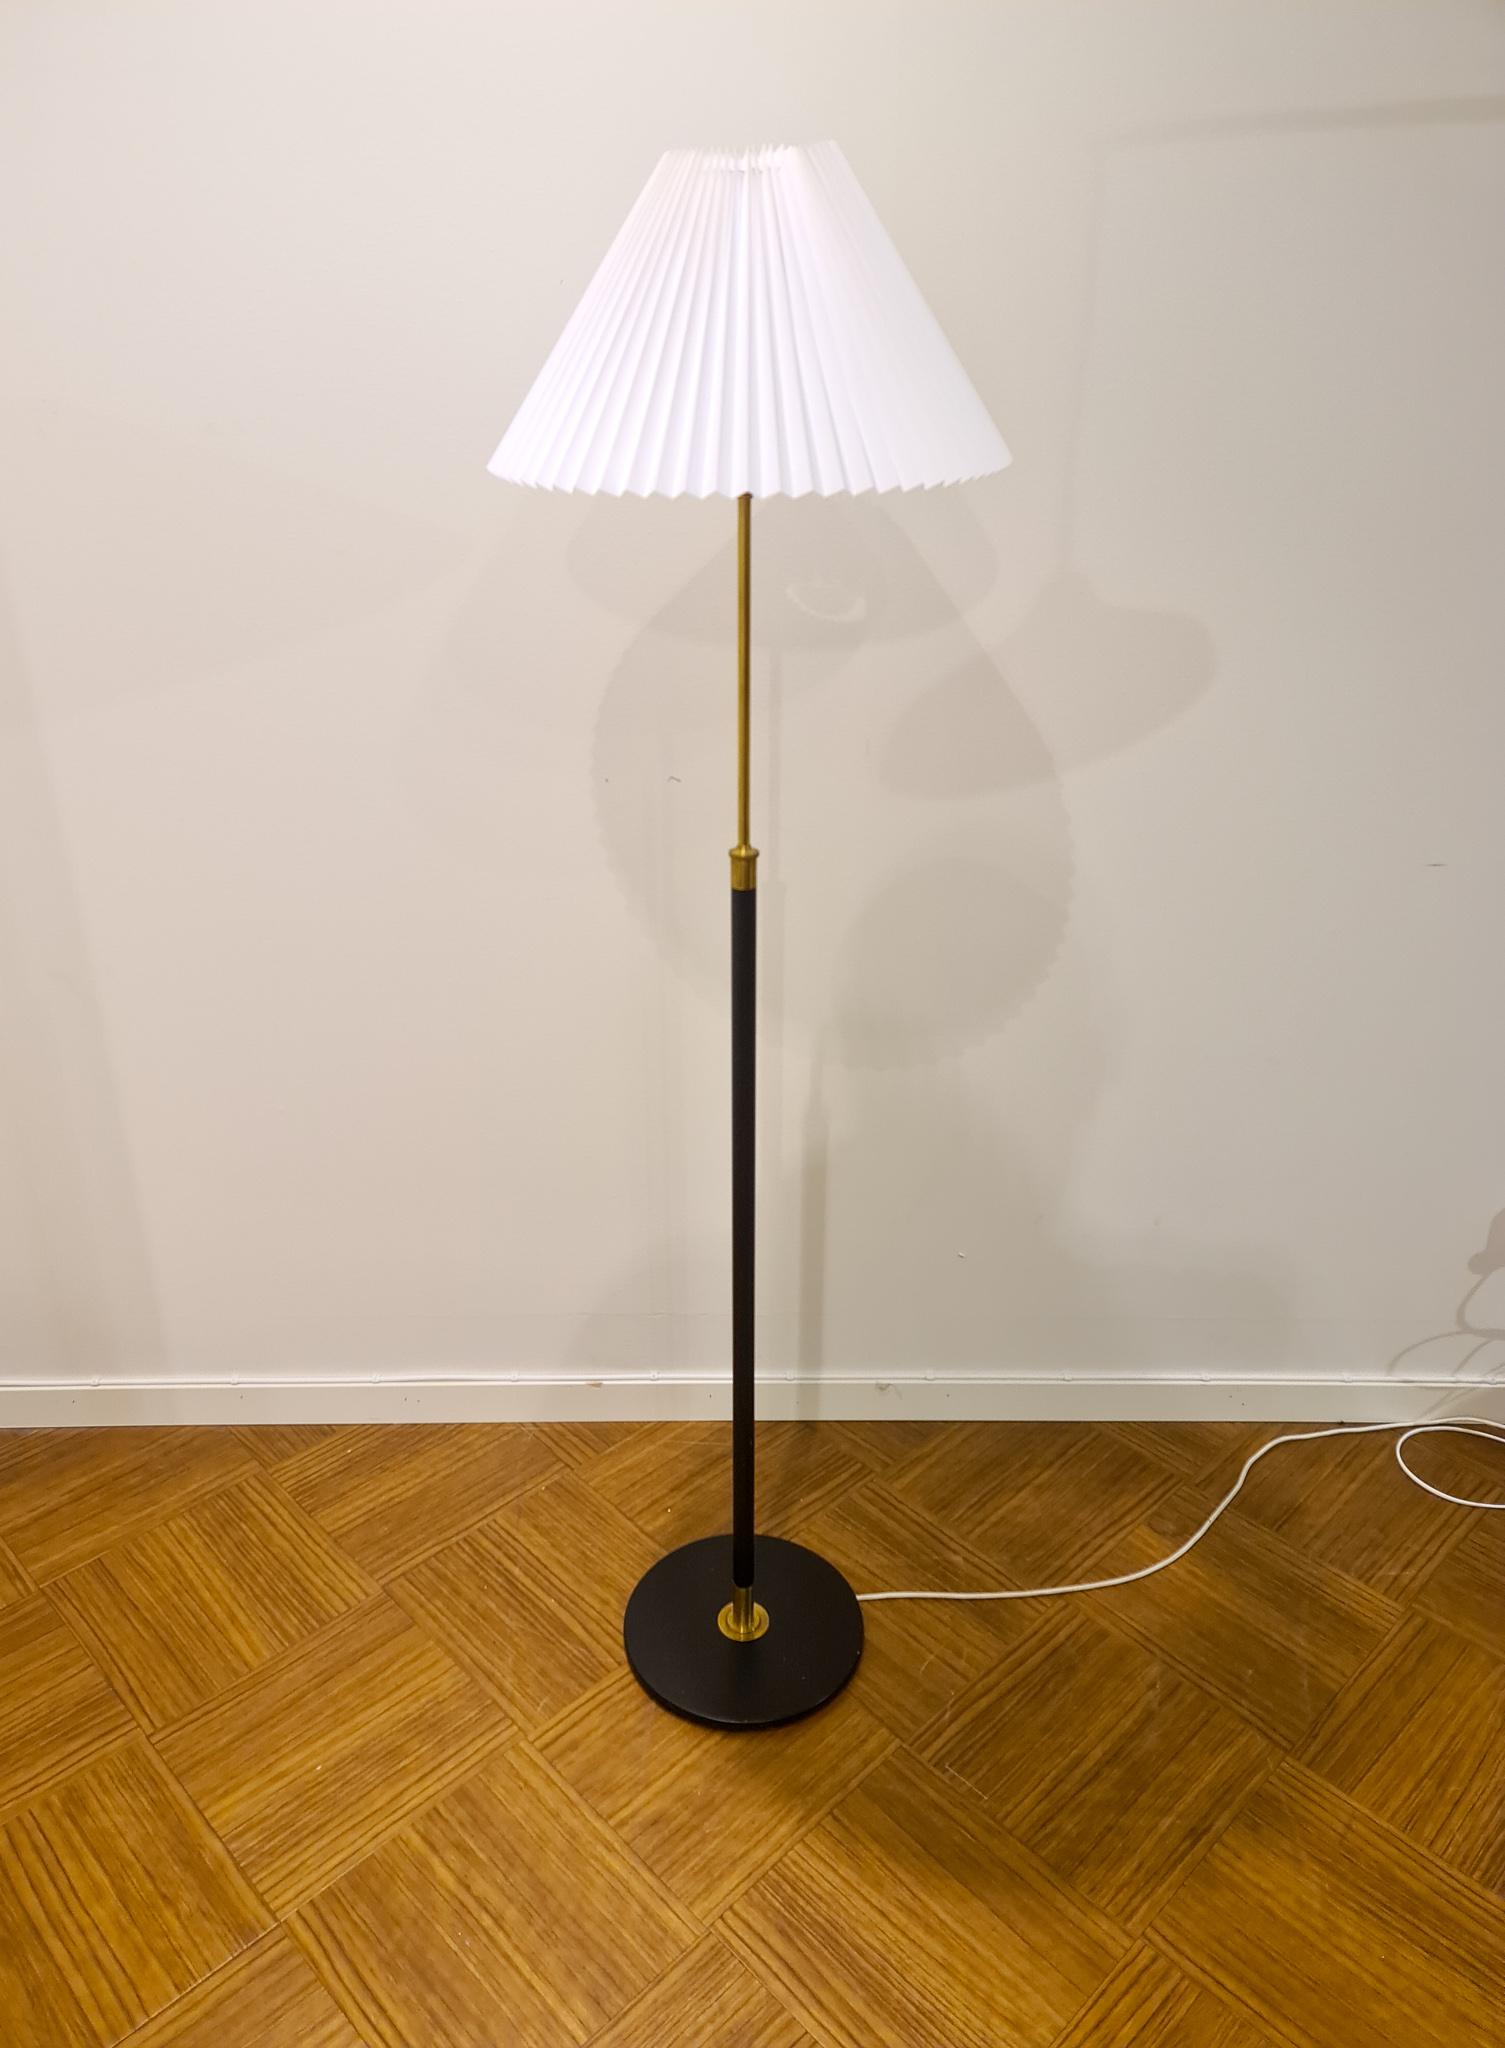 Late 20th Century Danish Midcentury Le Klint Floor Lamp No 351 Designed by Aage Petersen, Denmark